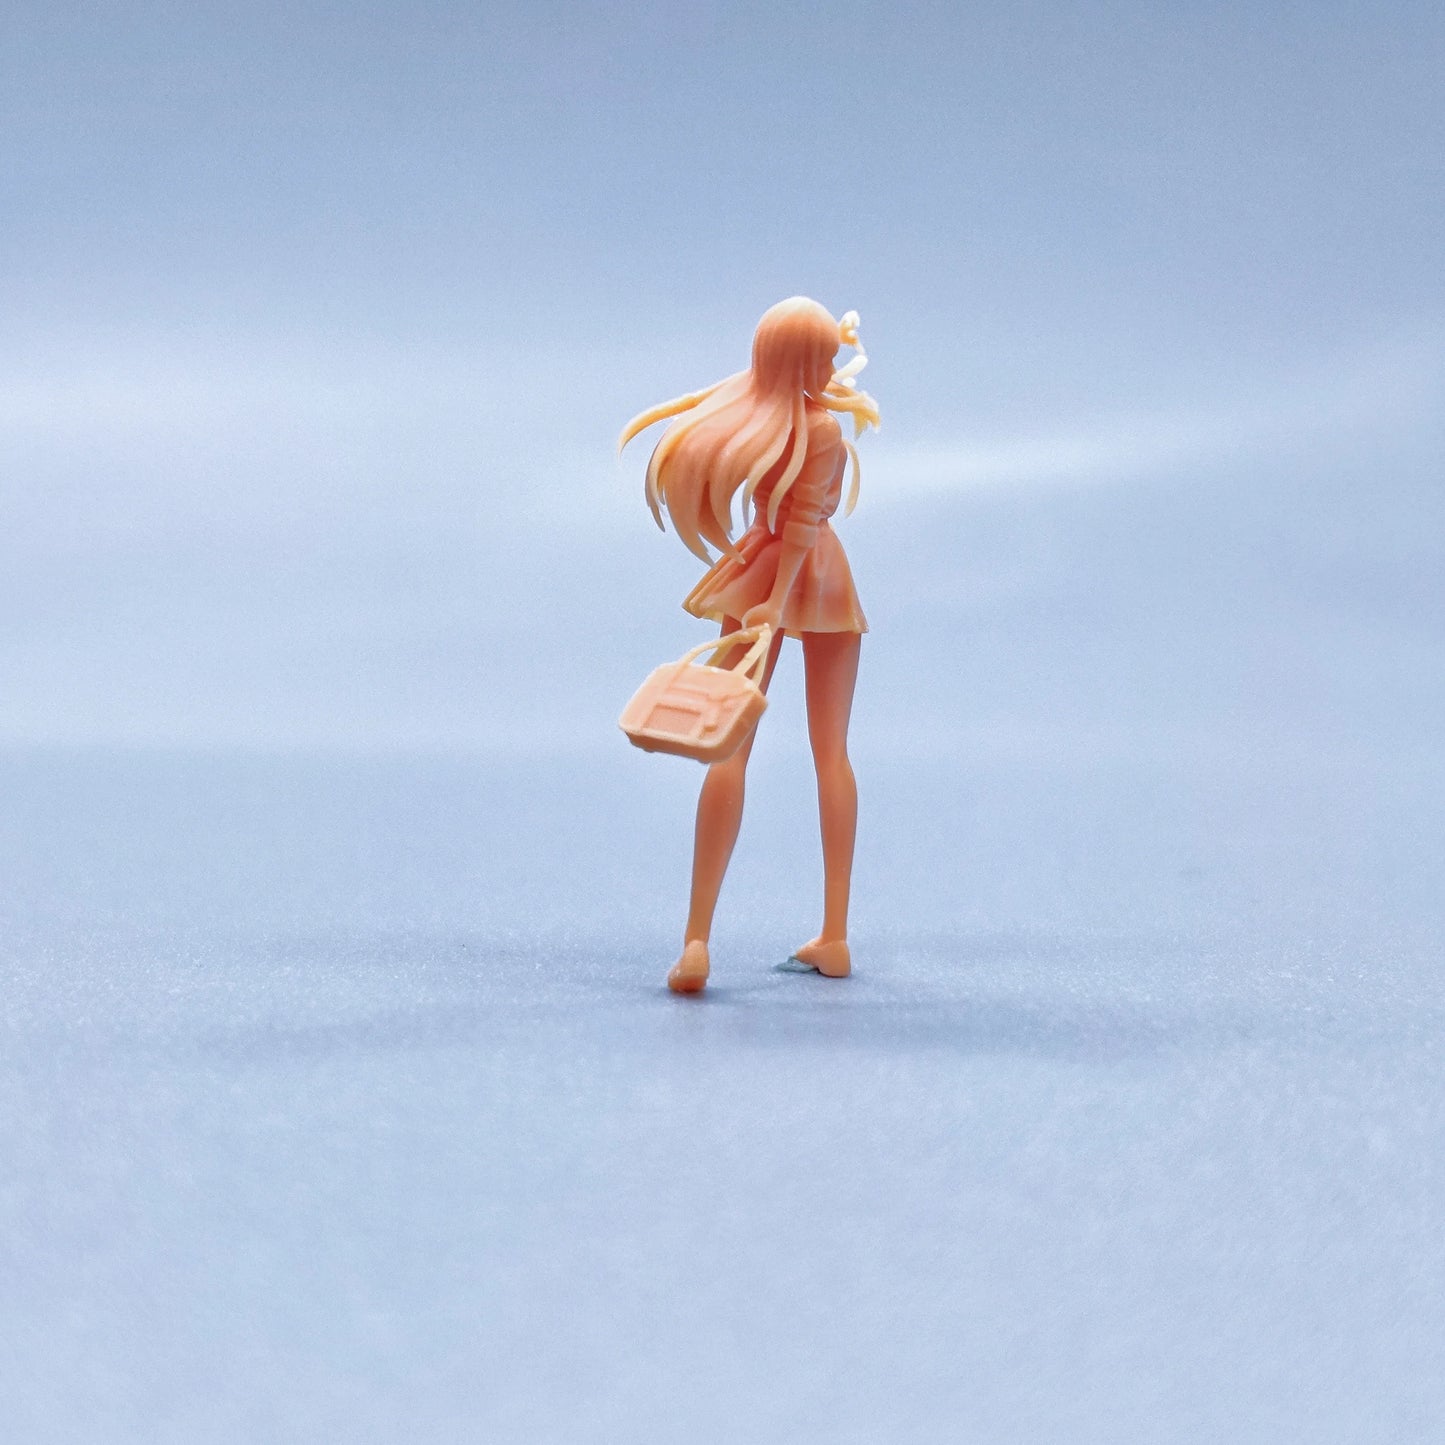 1/64 1/43 Figurines Scale Model Resin Standing Posture Higashikawa Biyah Uncolored Miniatures Diorama Hand-painted  V707